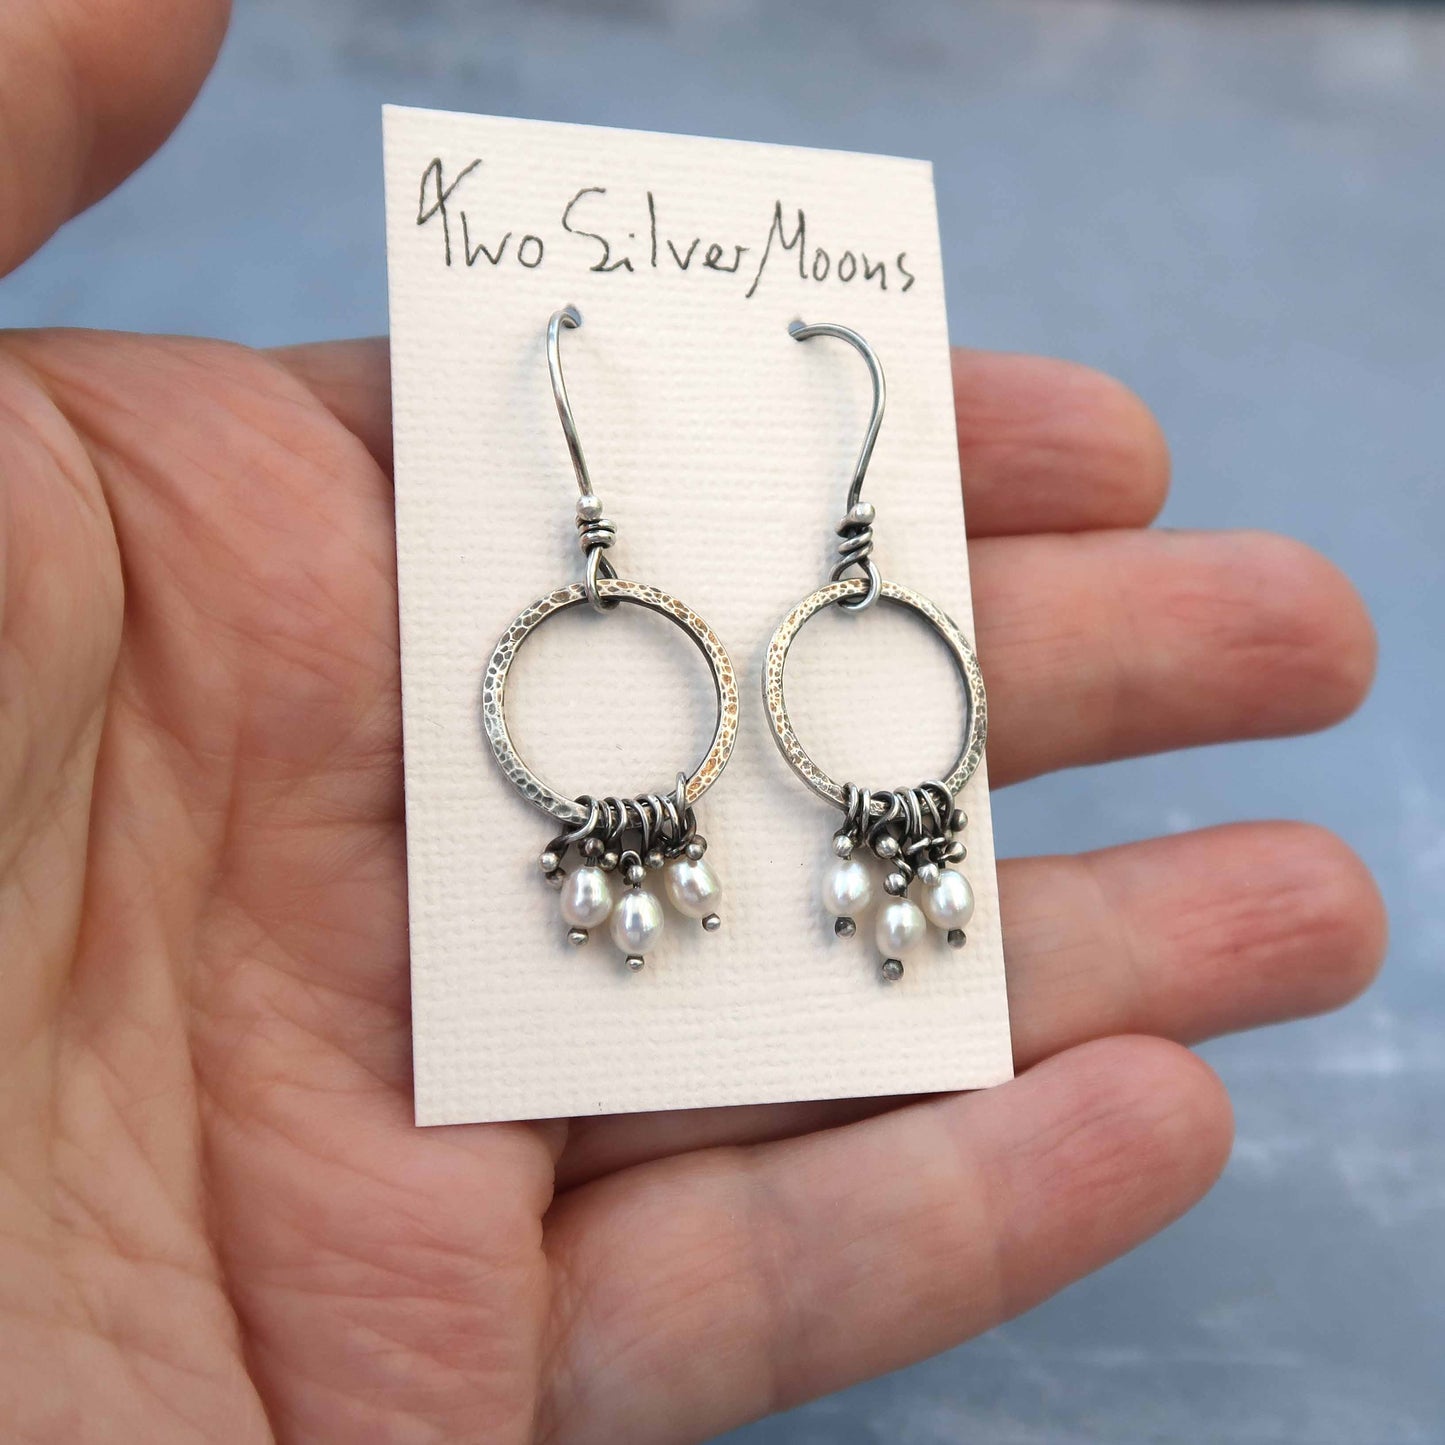 Unique pearl earrings in sterling silver